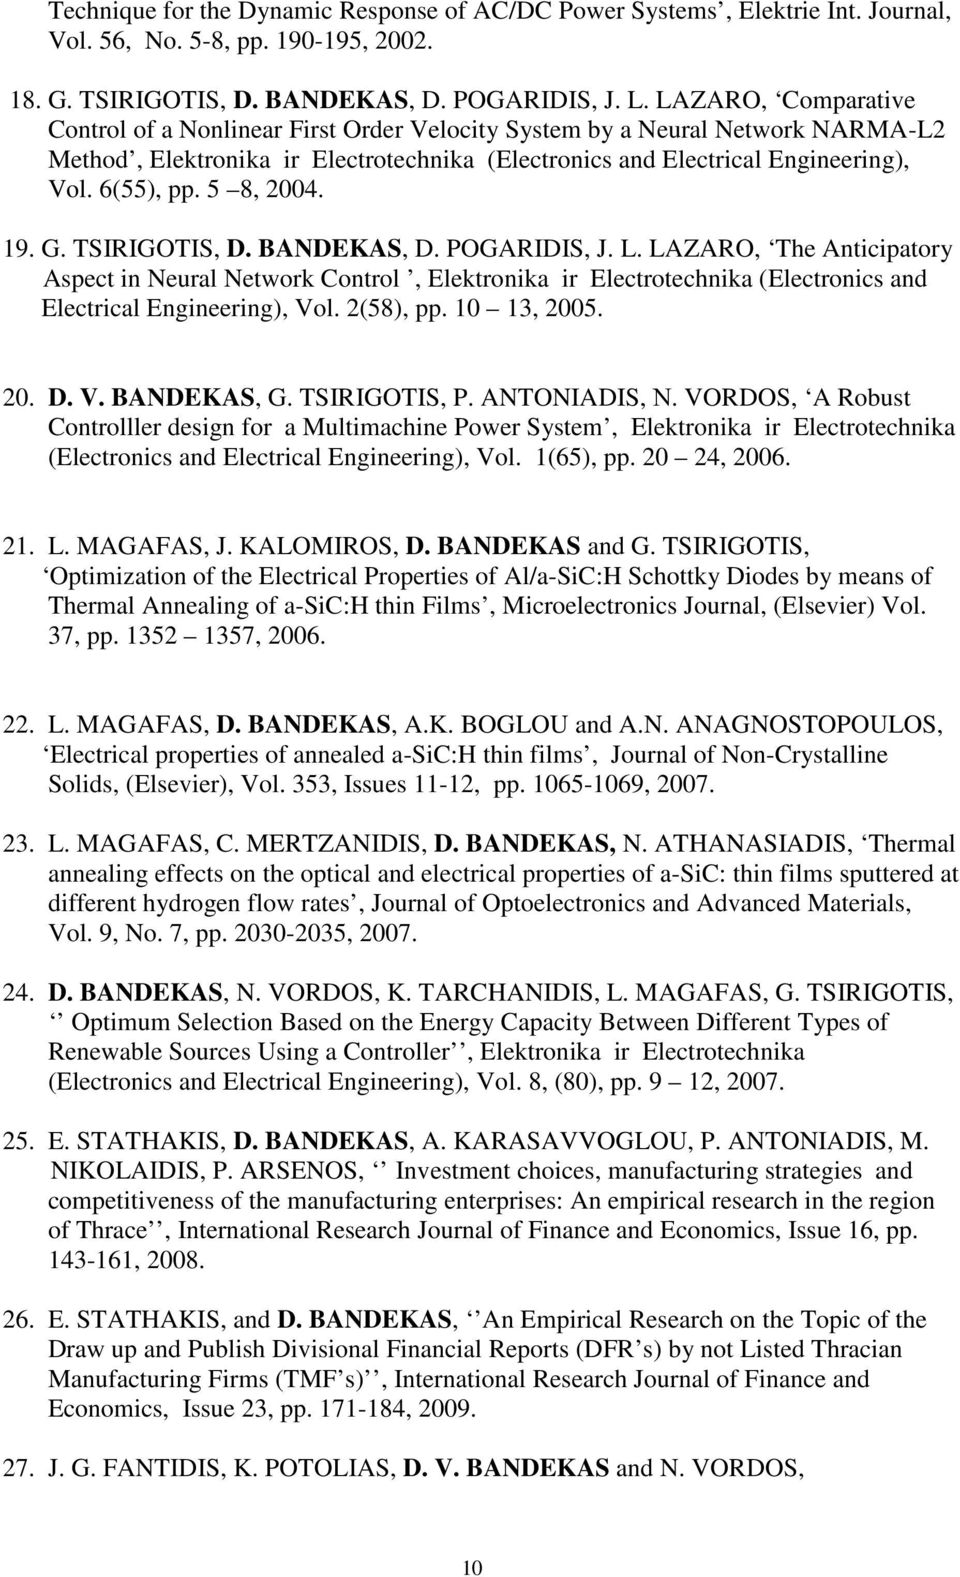 5 8, 2004. 19. G. TSIRIGOTIS, D. BANDEKAS, D. POGARIDIS, J. L. LAZARO, The Anticipatory Aspect in Neural Network Control, Elektronika ir Electrotechnika (Electronics and Electrical Engineering), Vol.